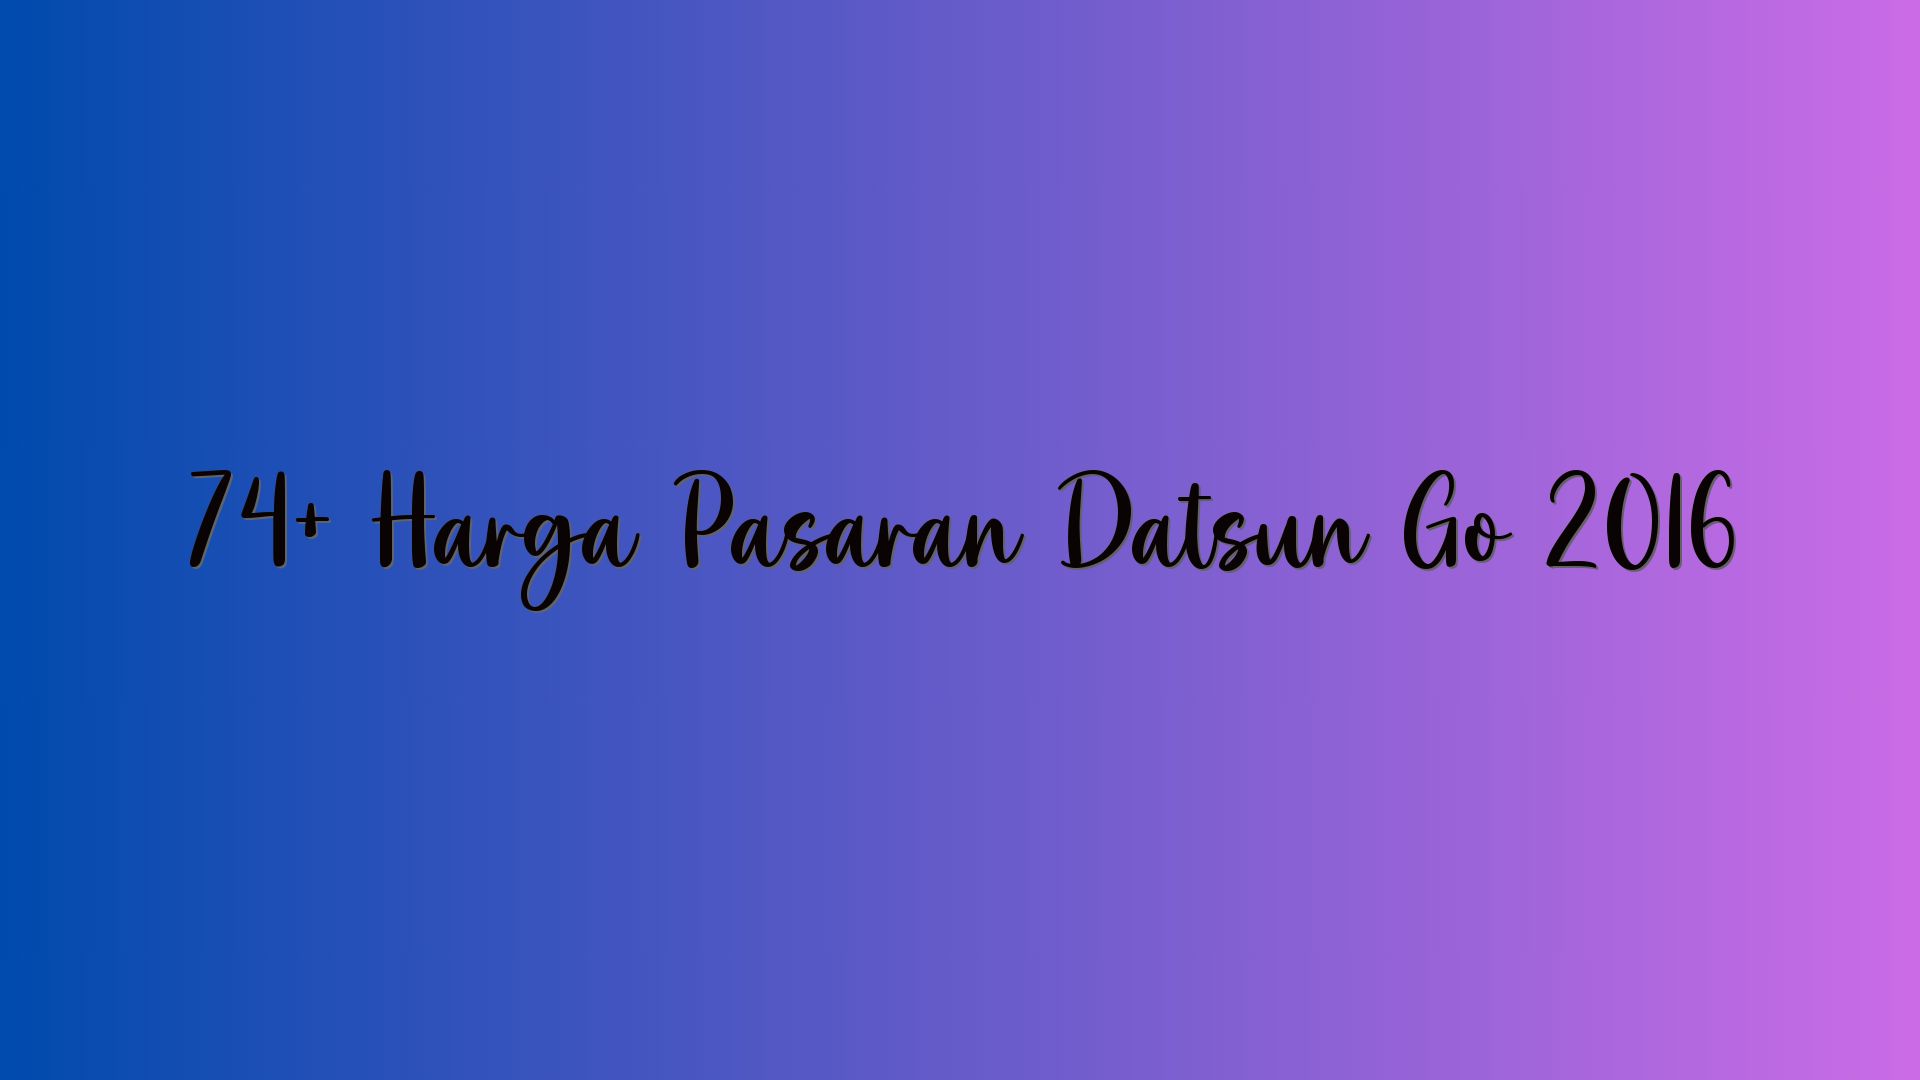 74+ Harga Pasaran Datsun Go 2016